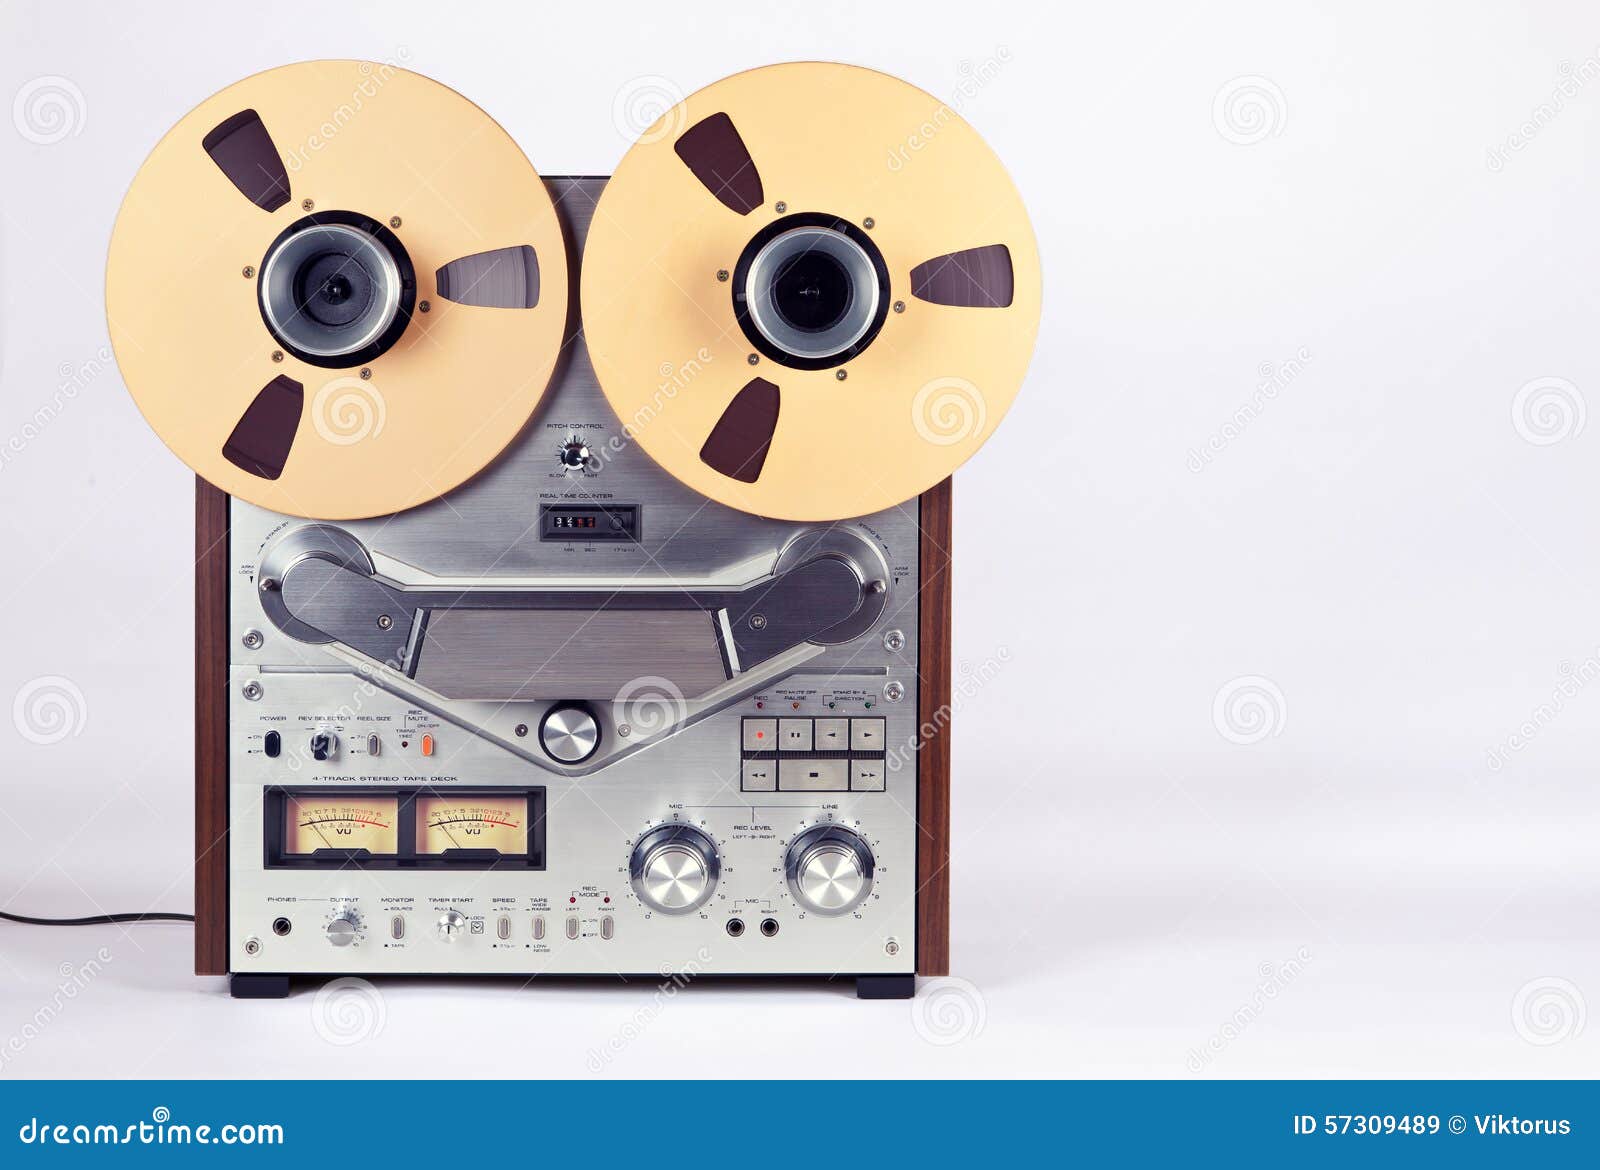 https://thumbs.dreamstime.com/z/analog-stereo-open-reel-tape-deck-recorder-player-reels-metal-57309489.jpg